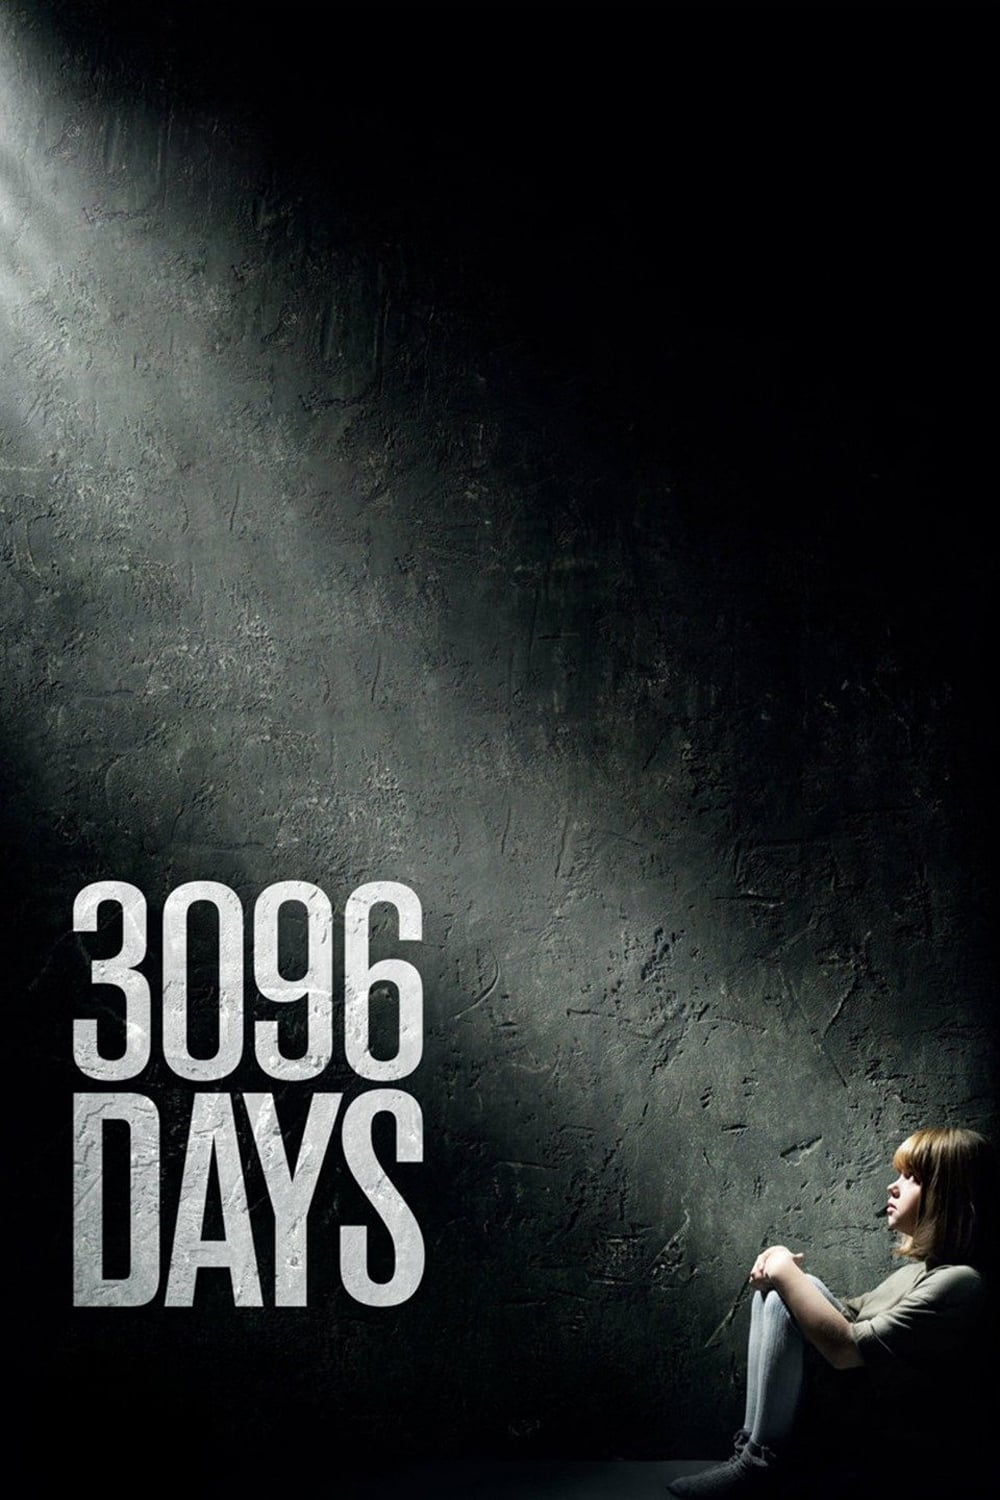 3096 Days